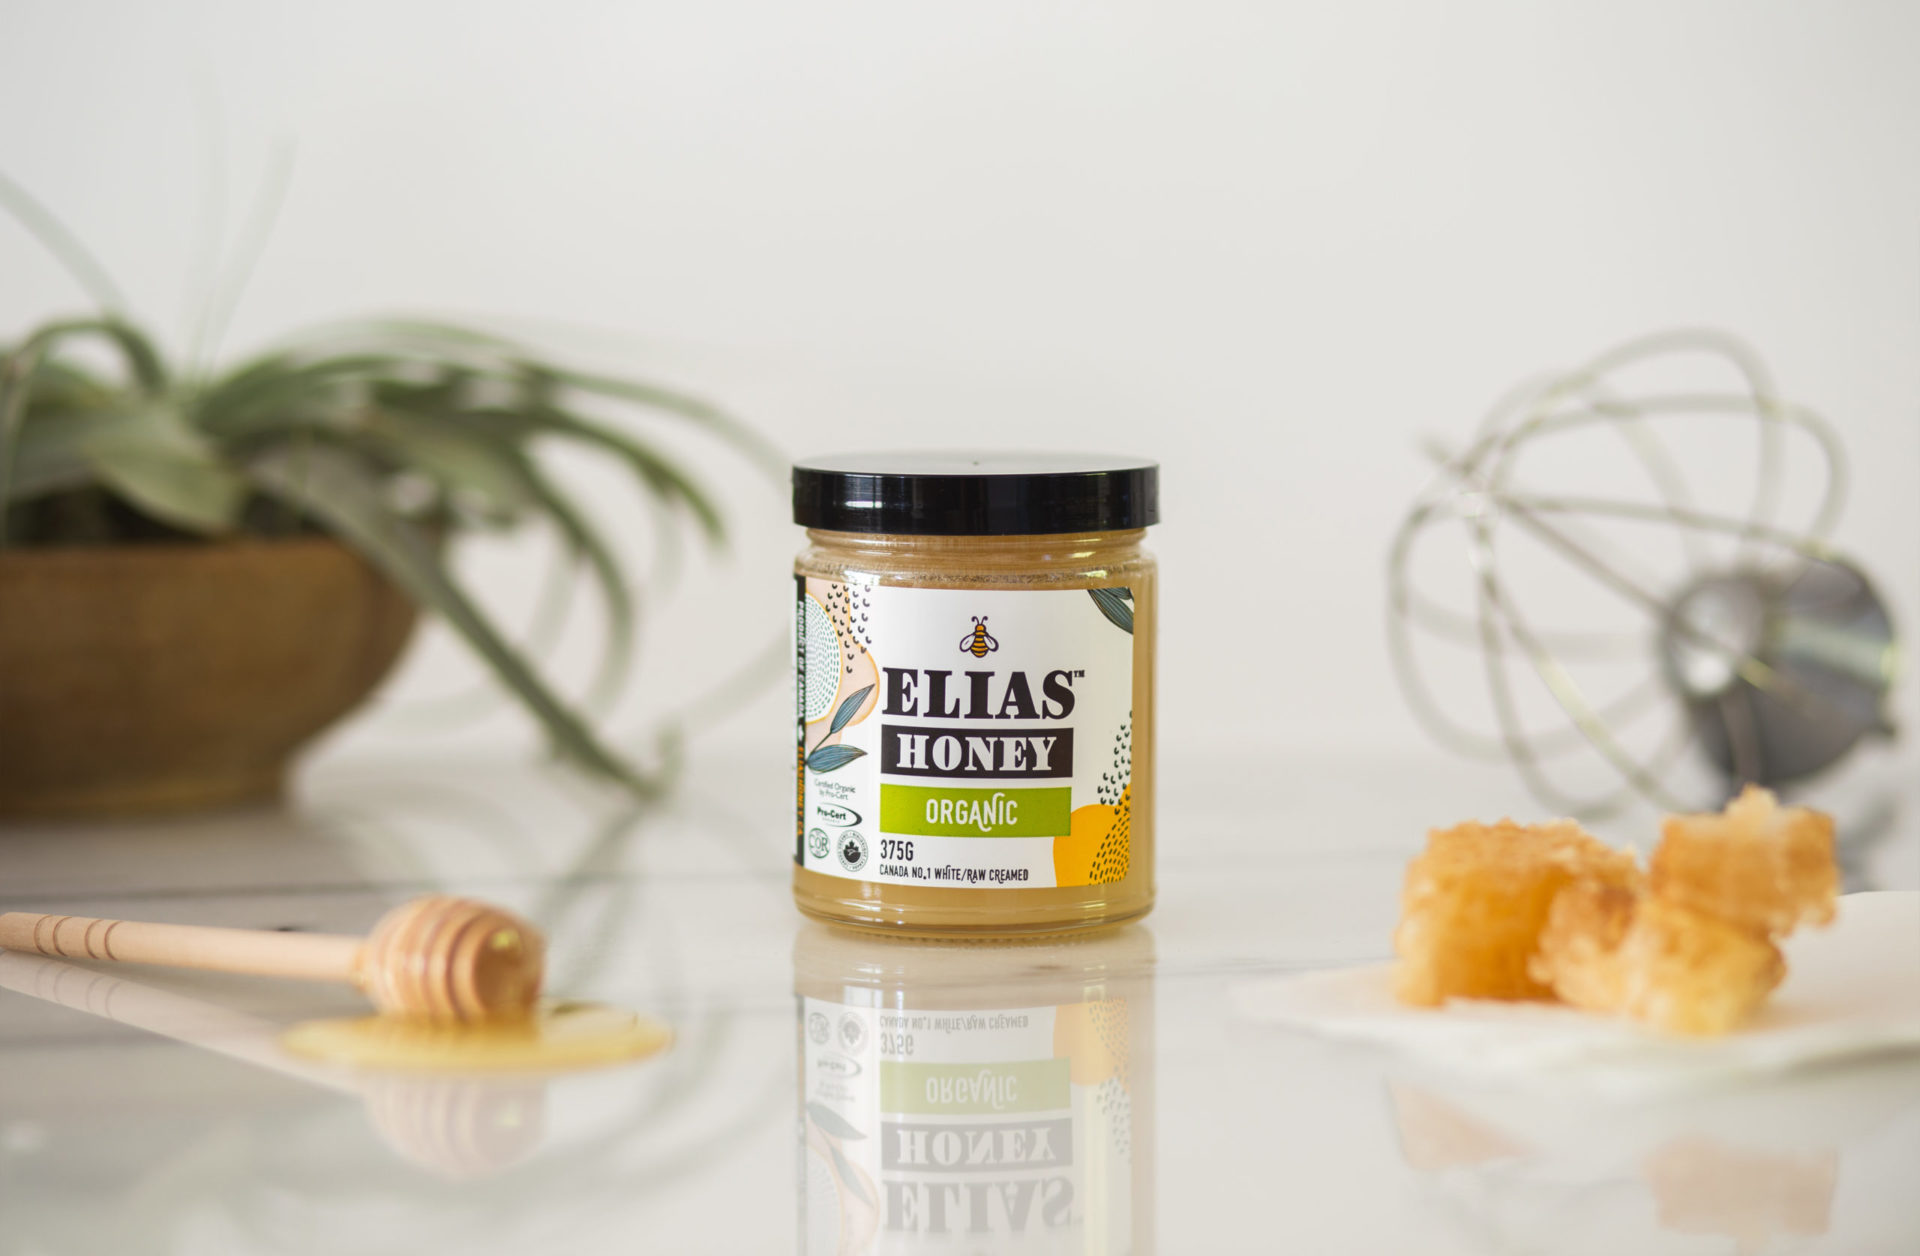 Elias Organic Honey product packaging photo